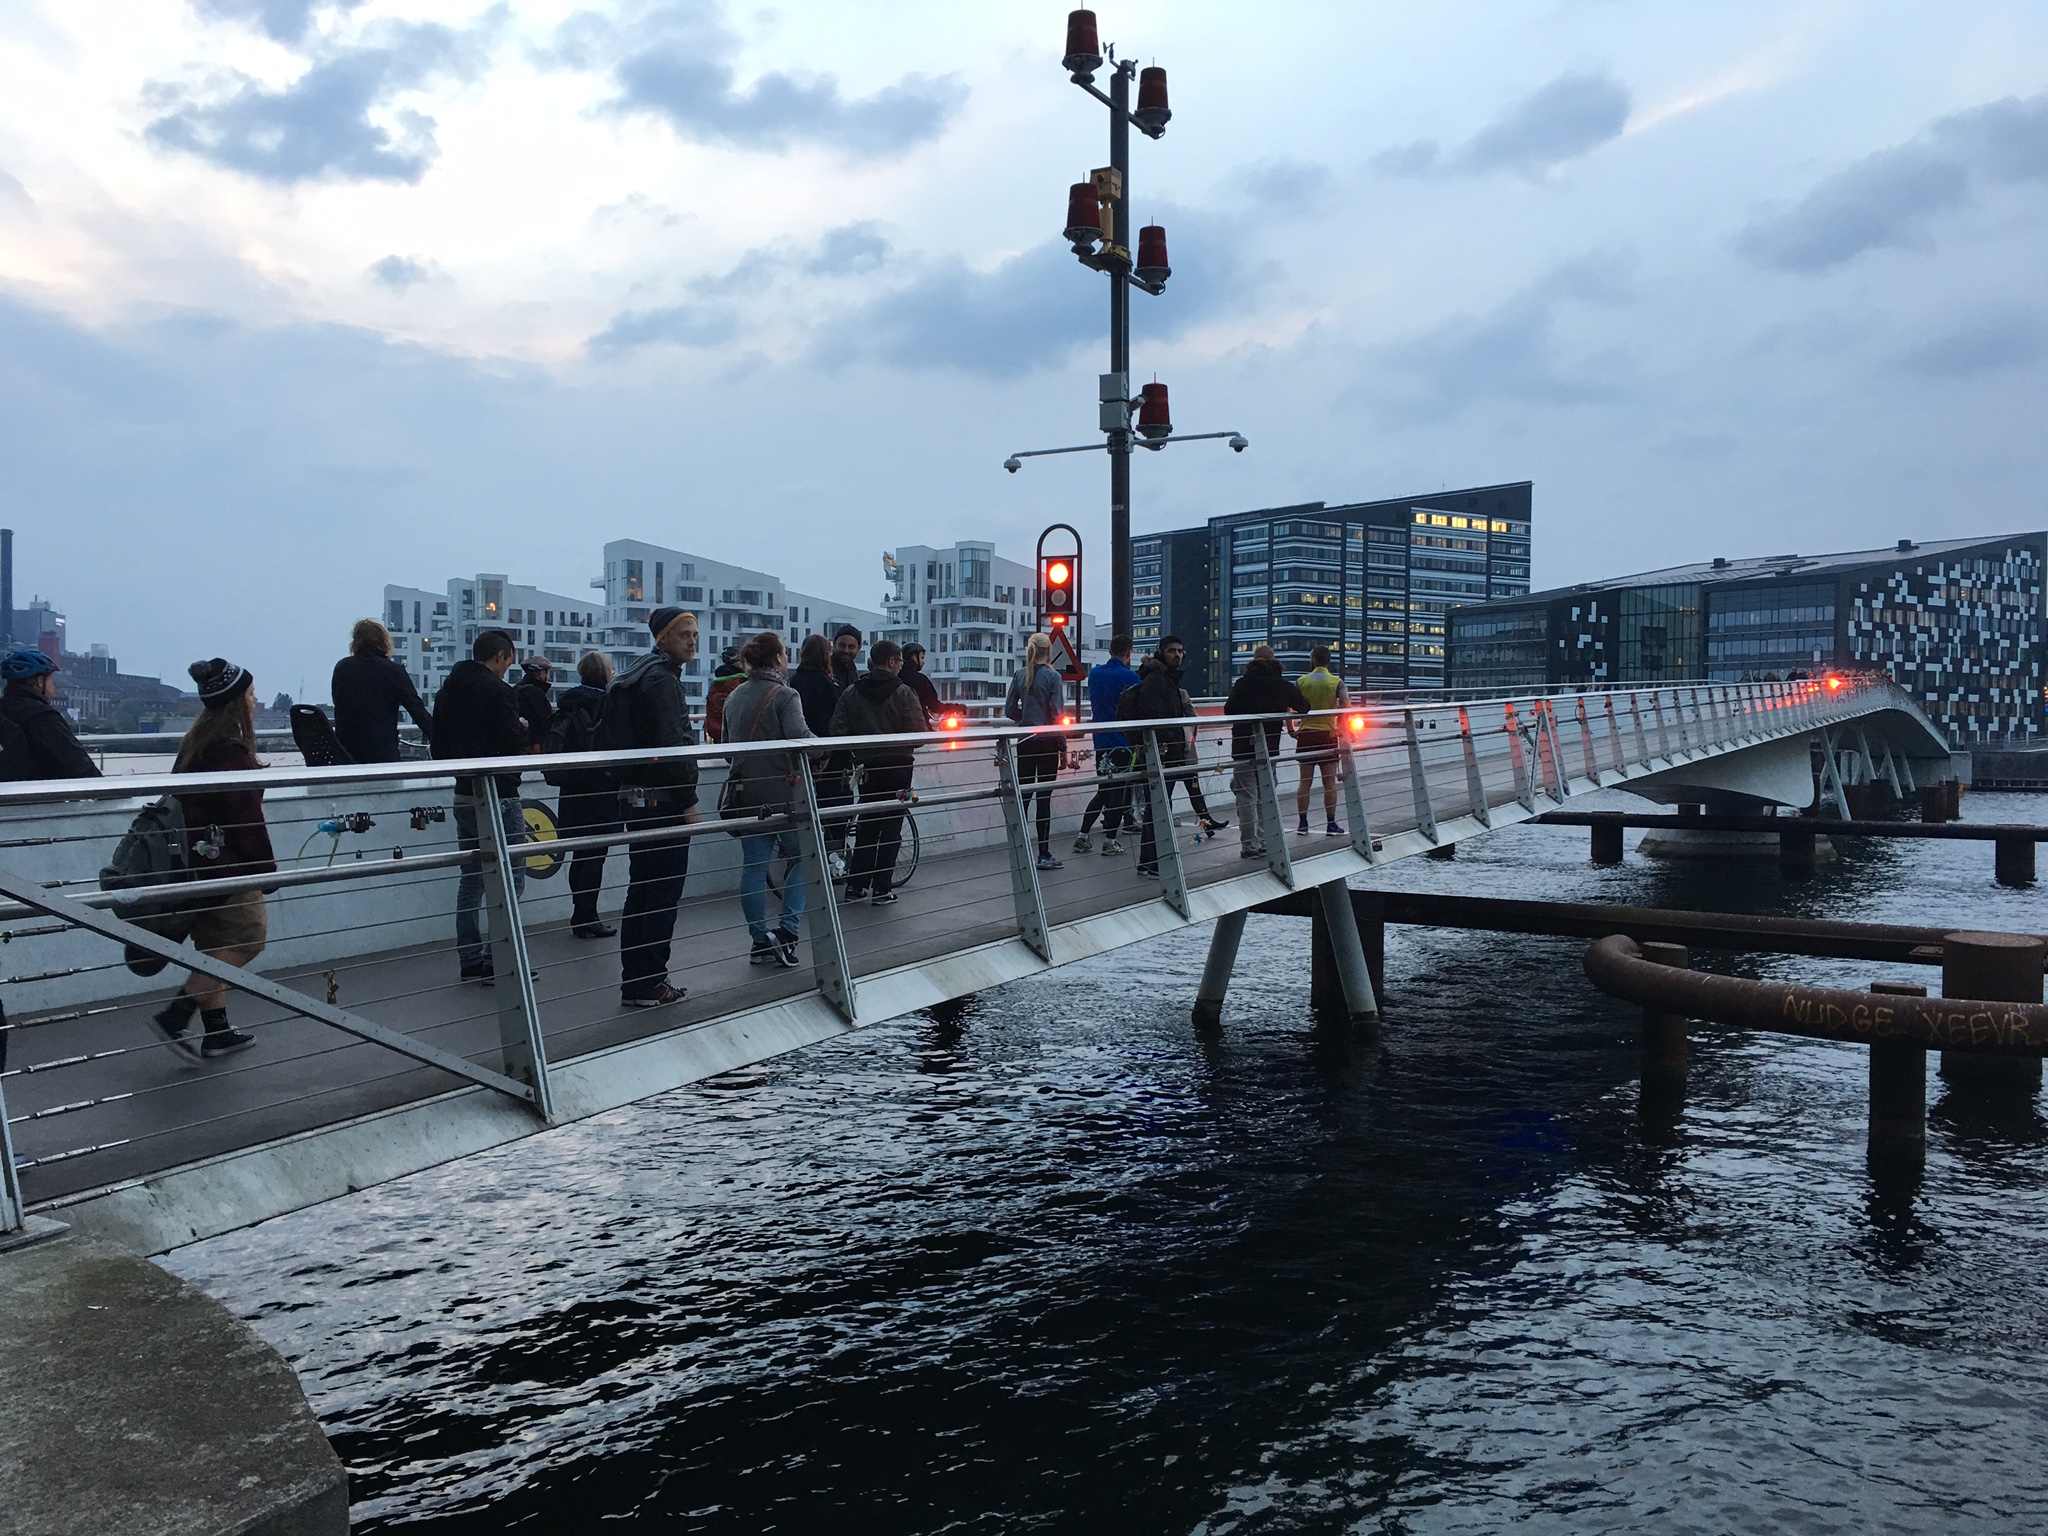 Footbridge across canal - København